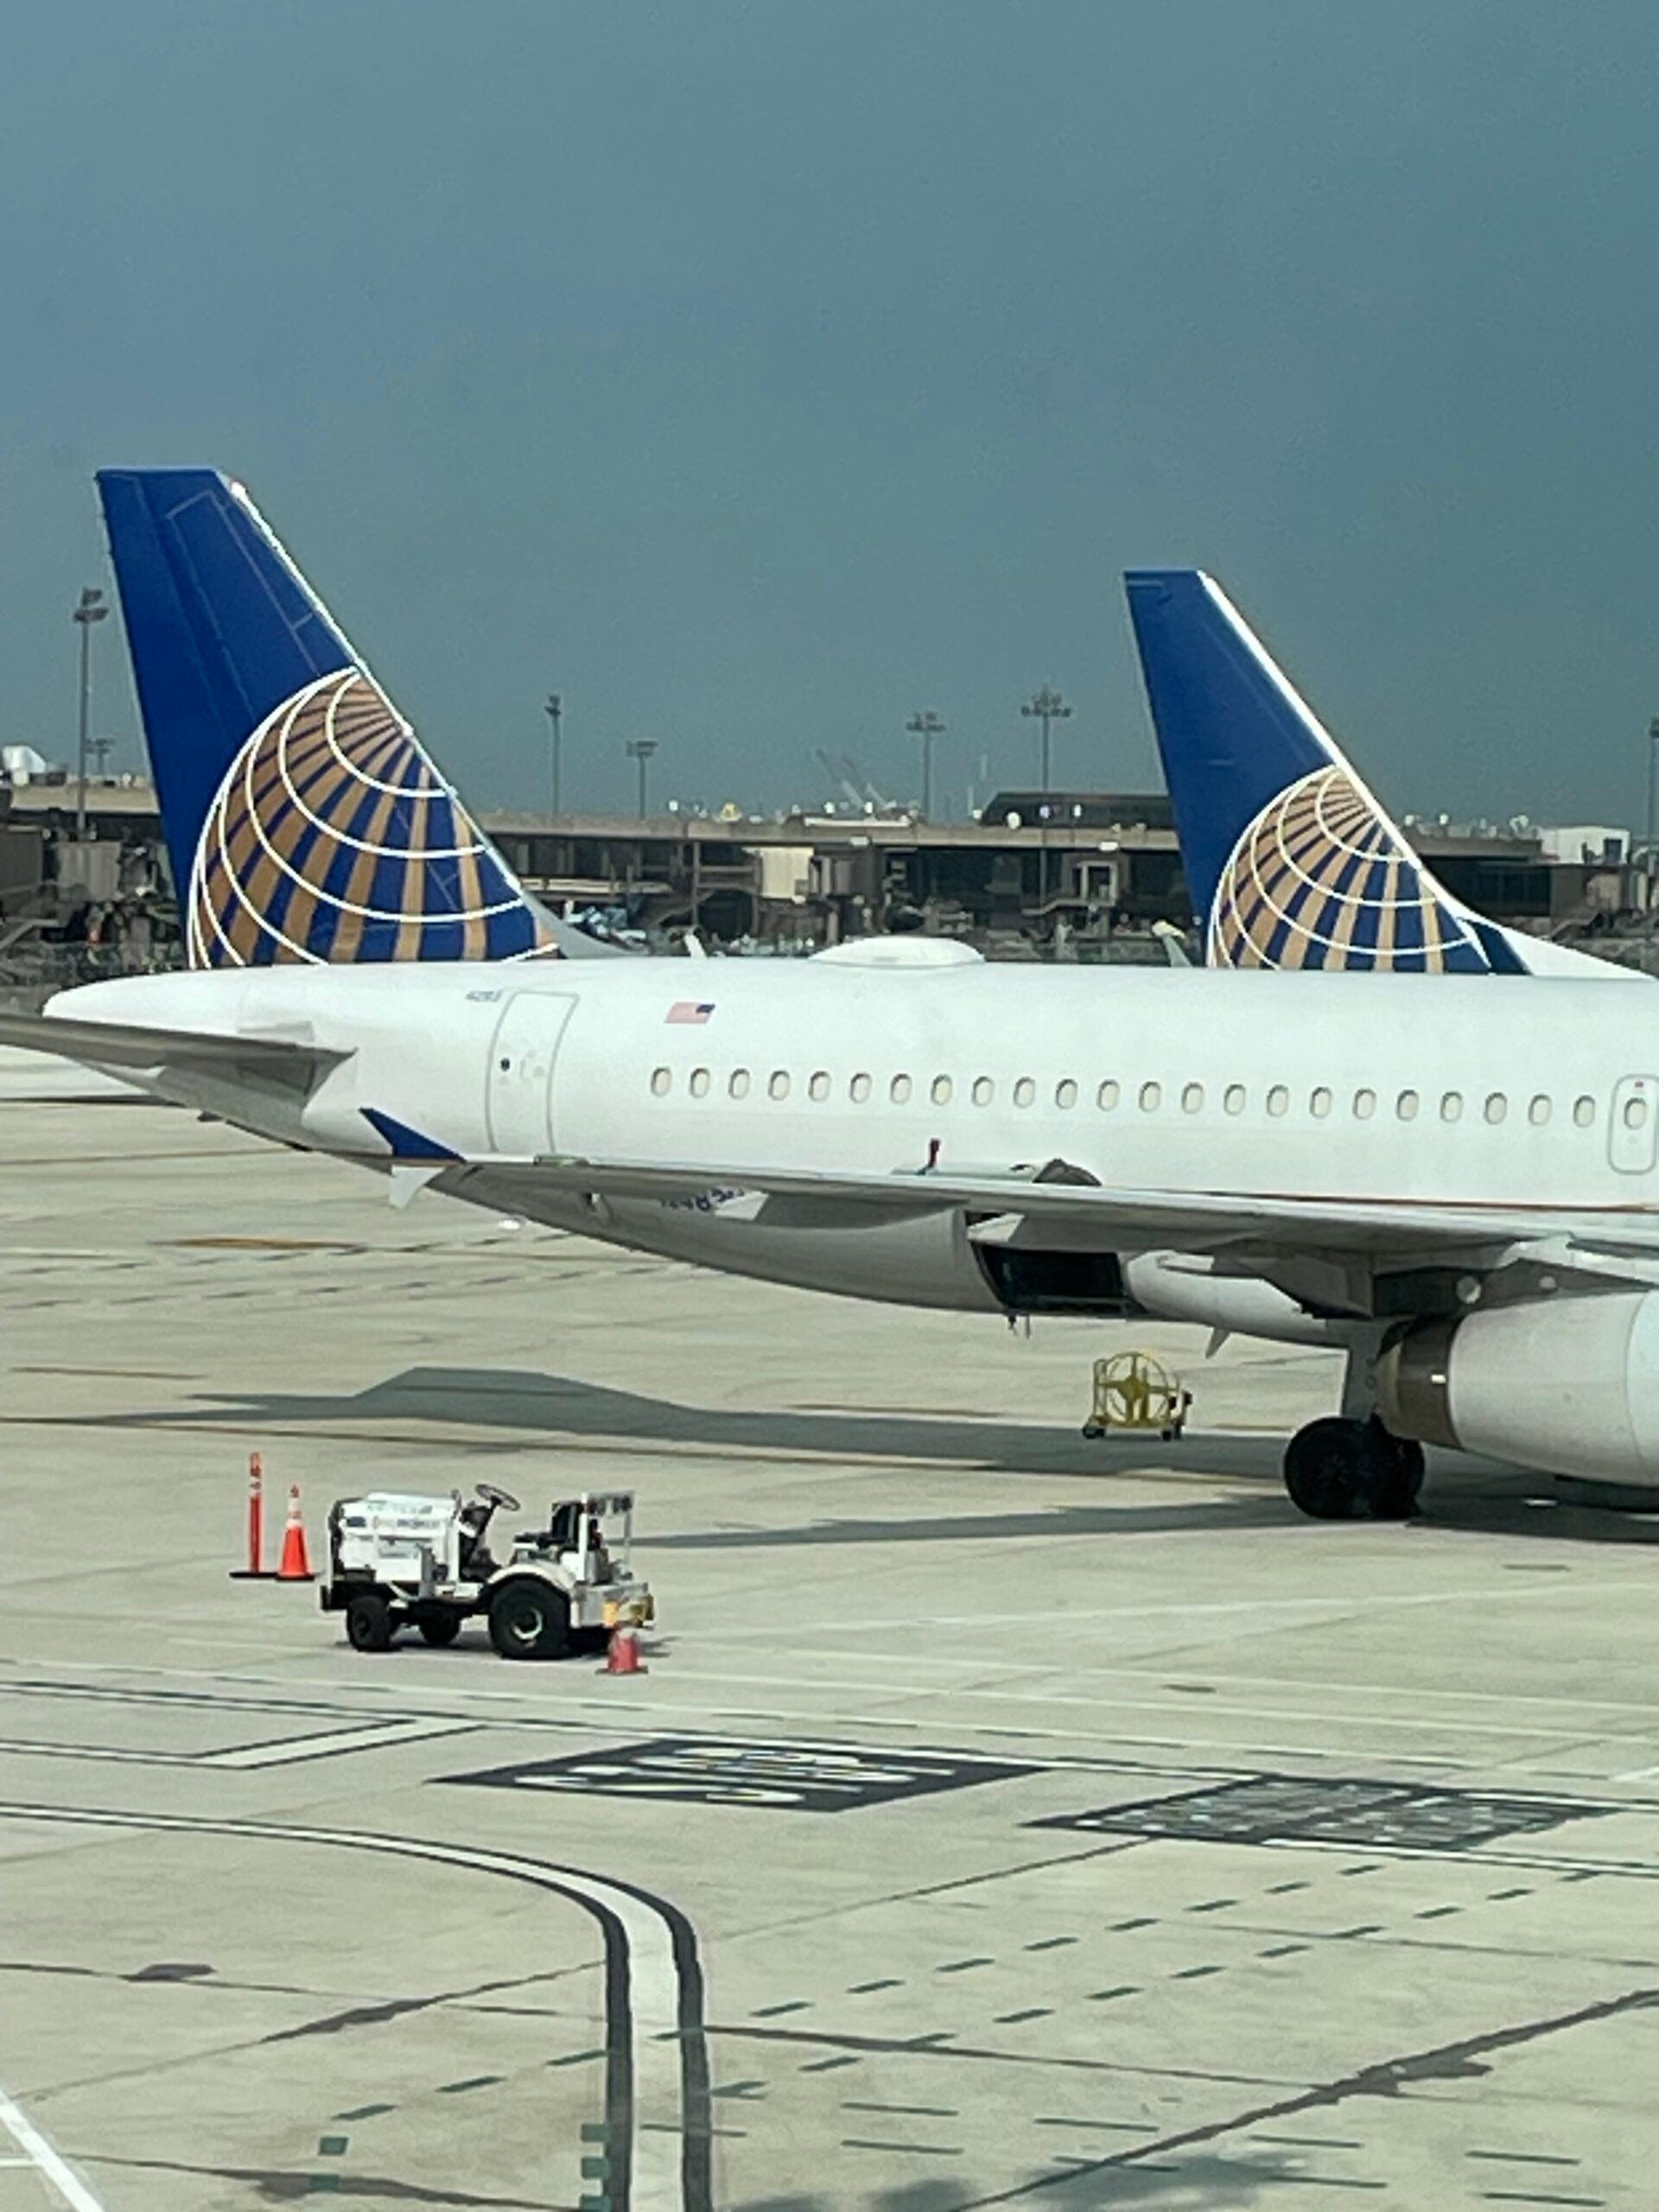 United Airlines in Newark, NJ